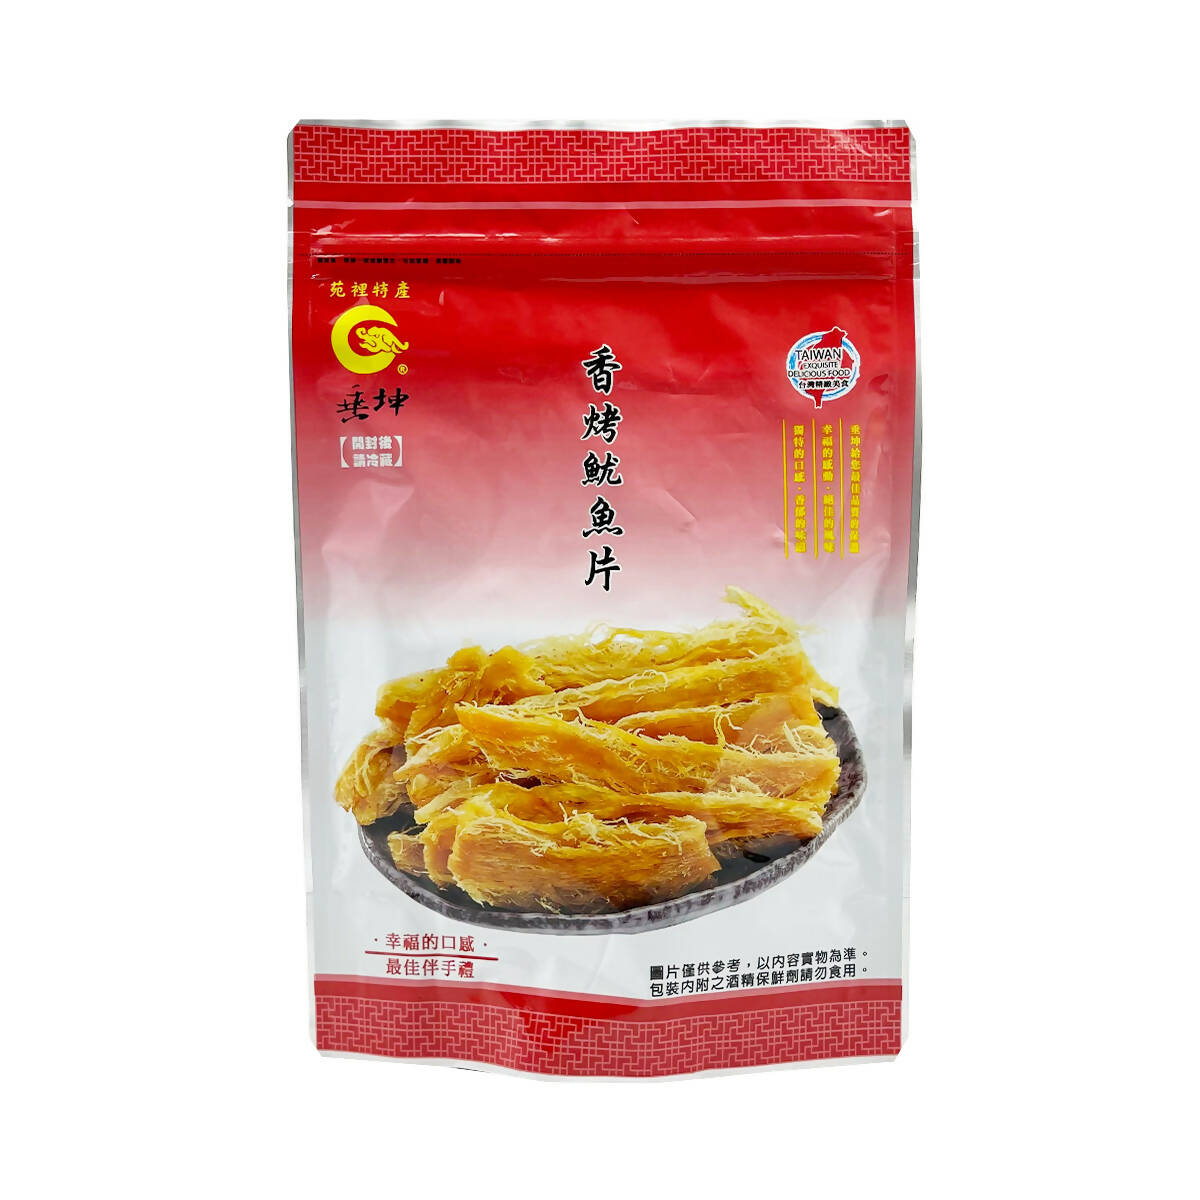 Taiwan direct mail【Chui Kun】 CHUEI KUN Grilled Squid 170g 